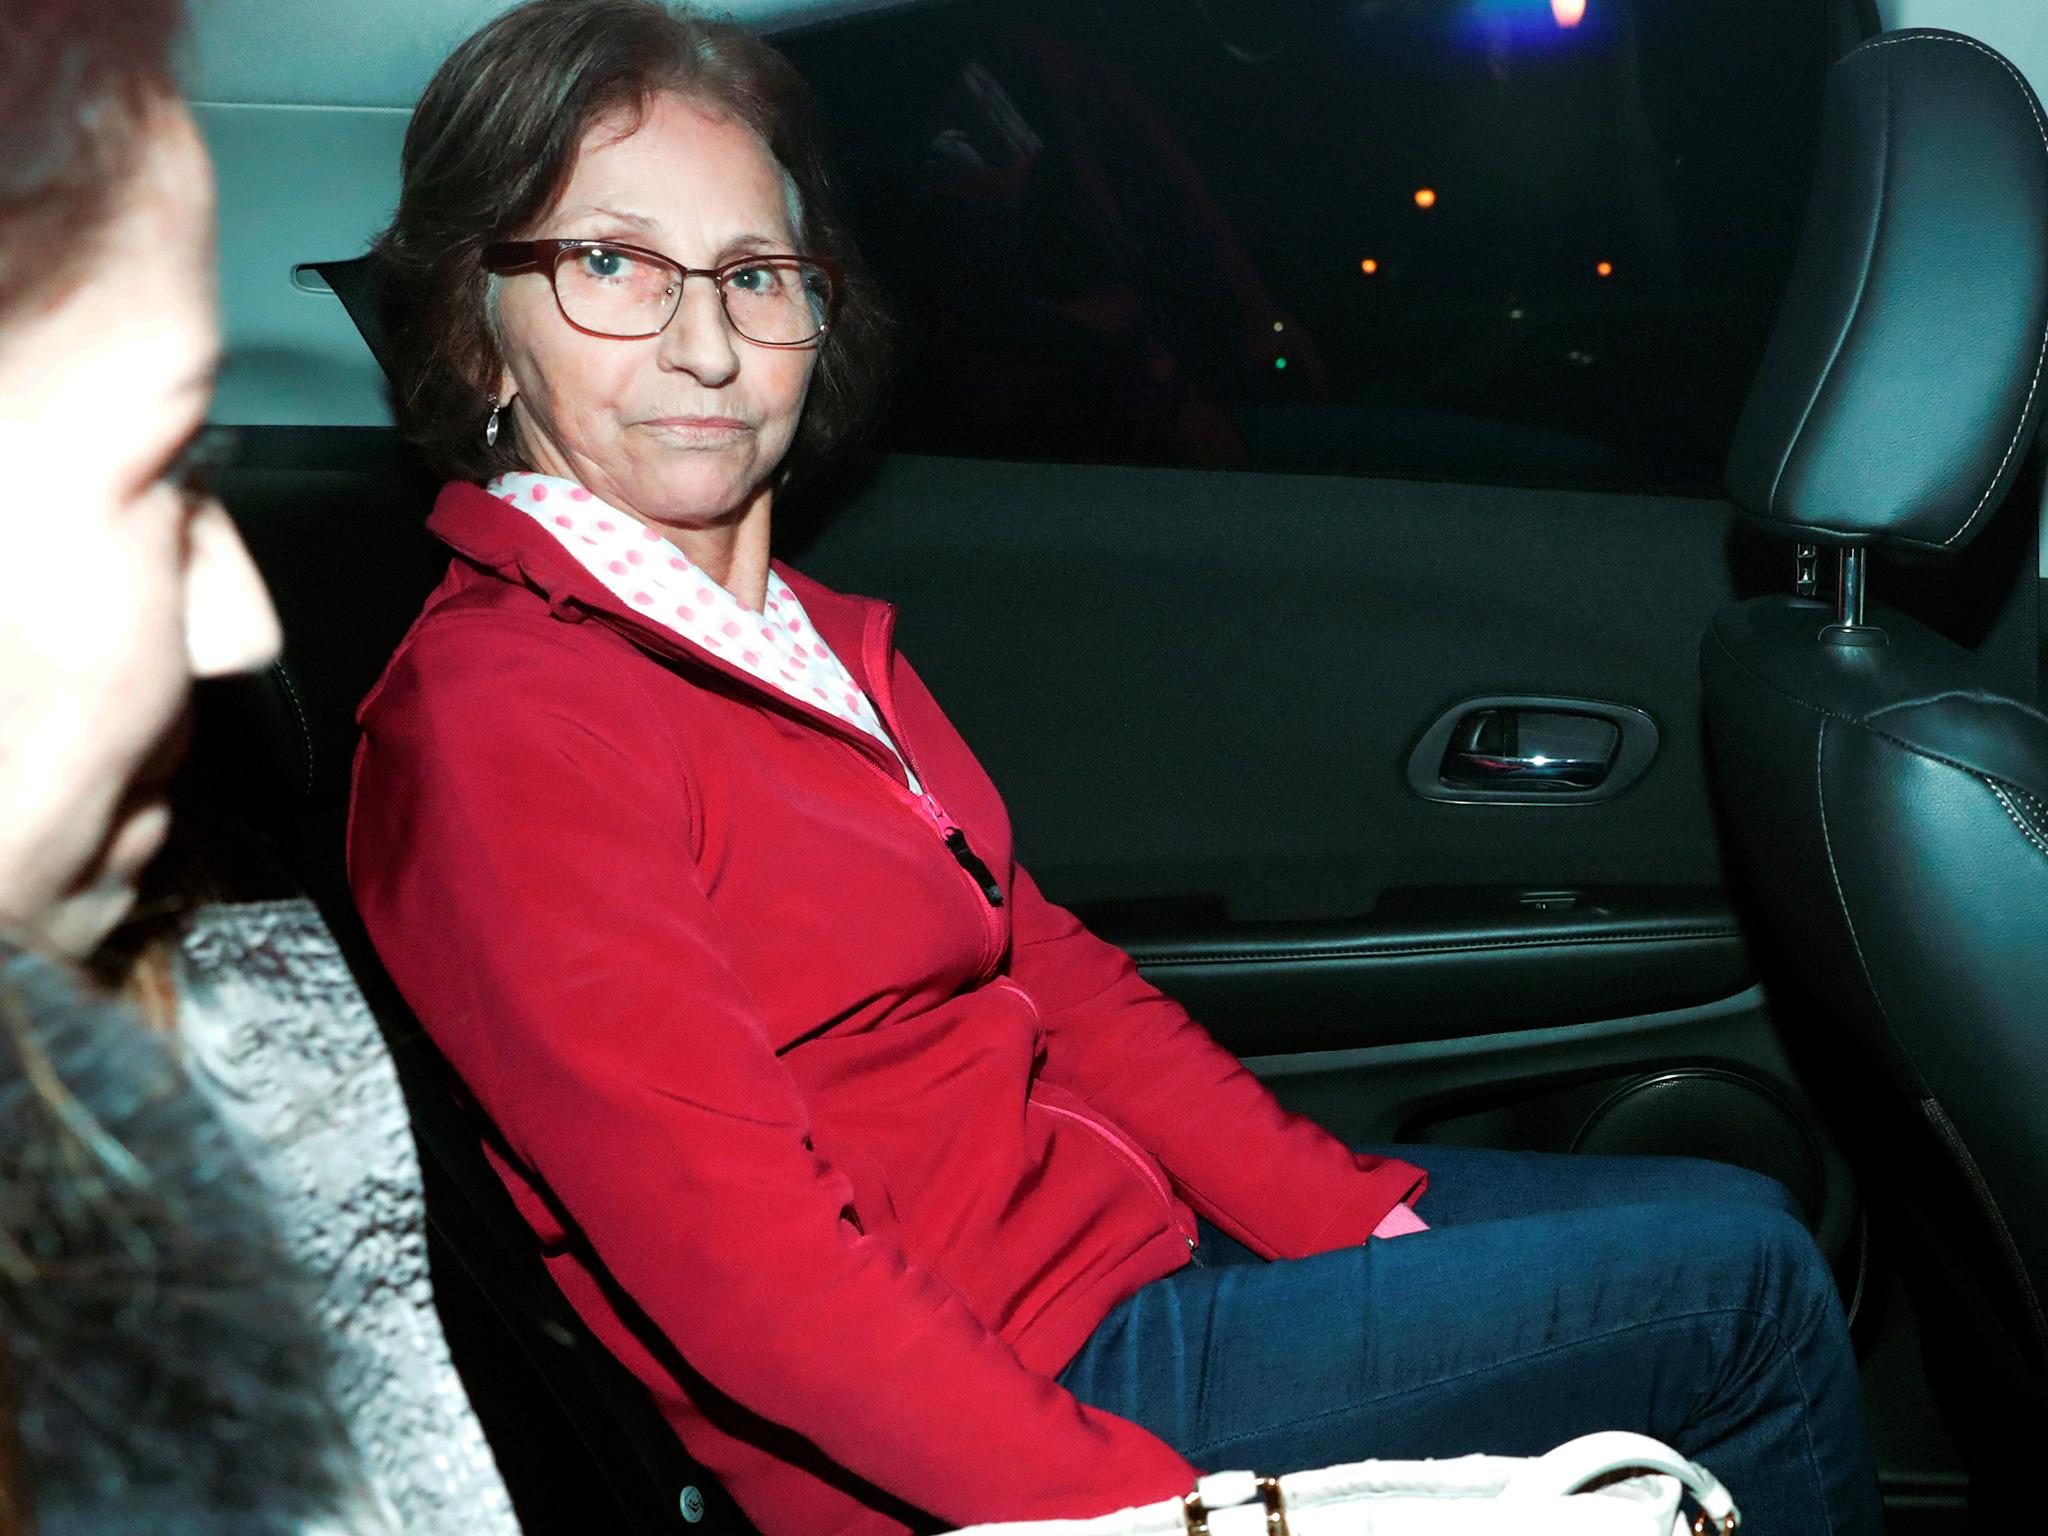 Aparecida Schunck, mother-in-law of Formula One supremo Bernie Ecclestone, leaves a police station in Sao Paulo, Brazil